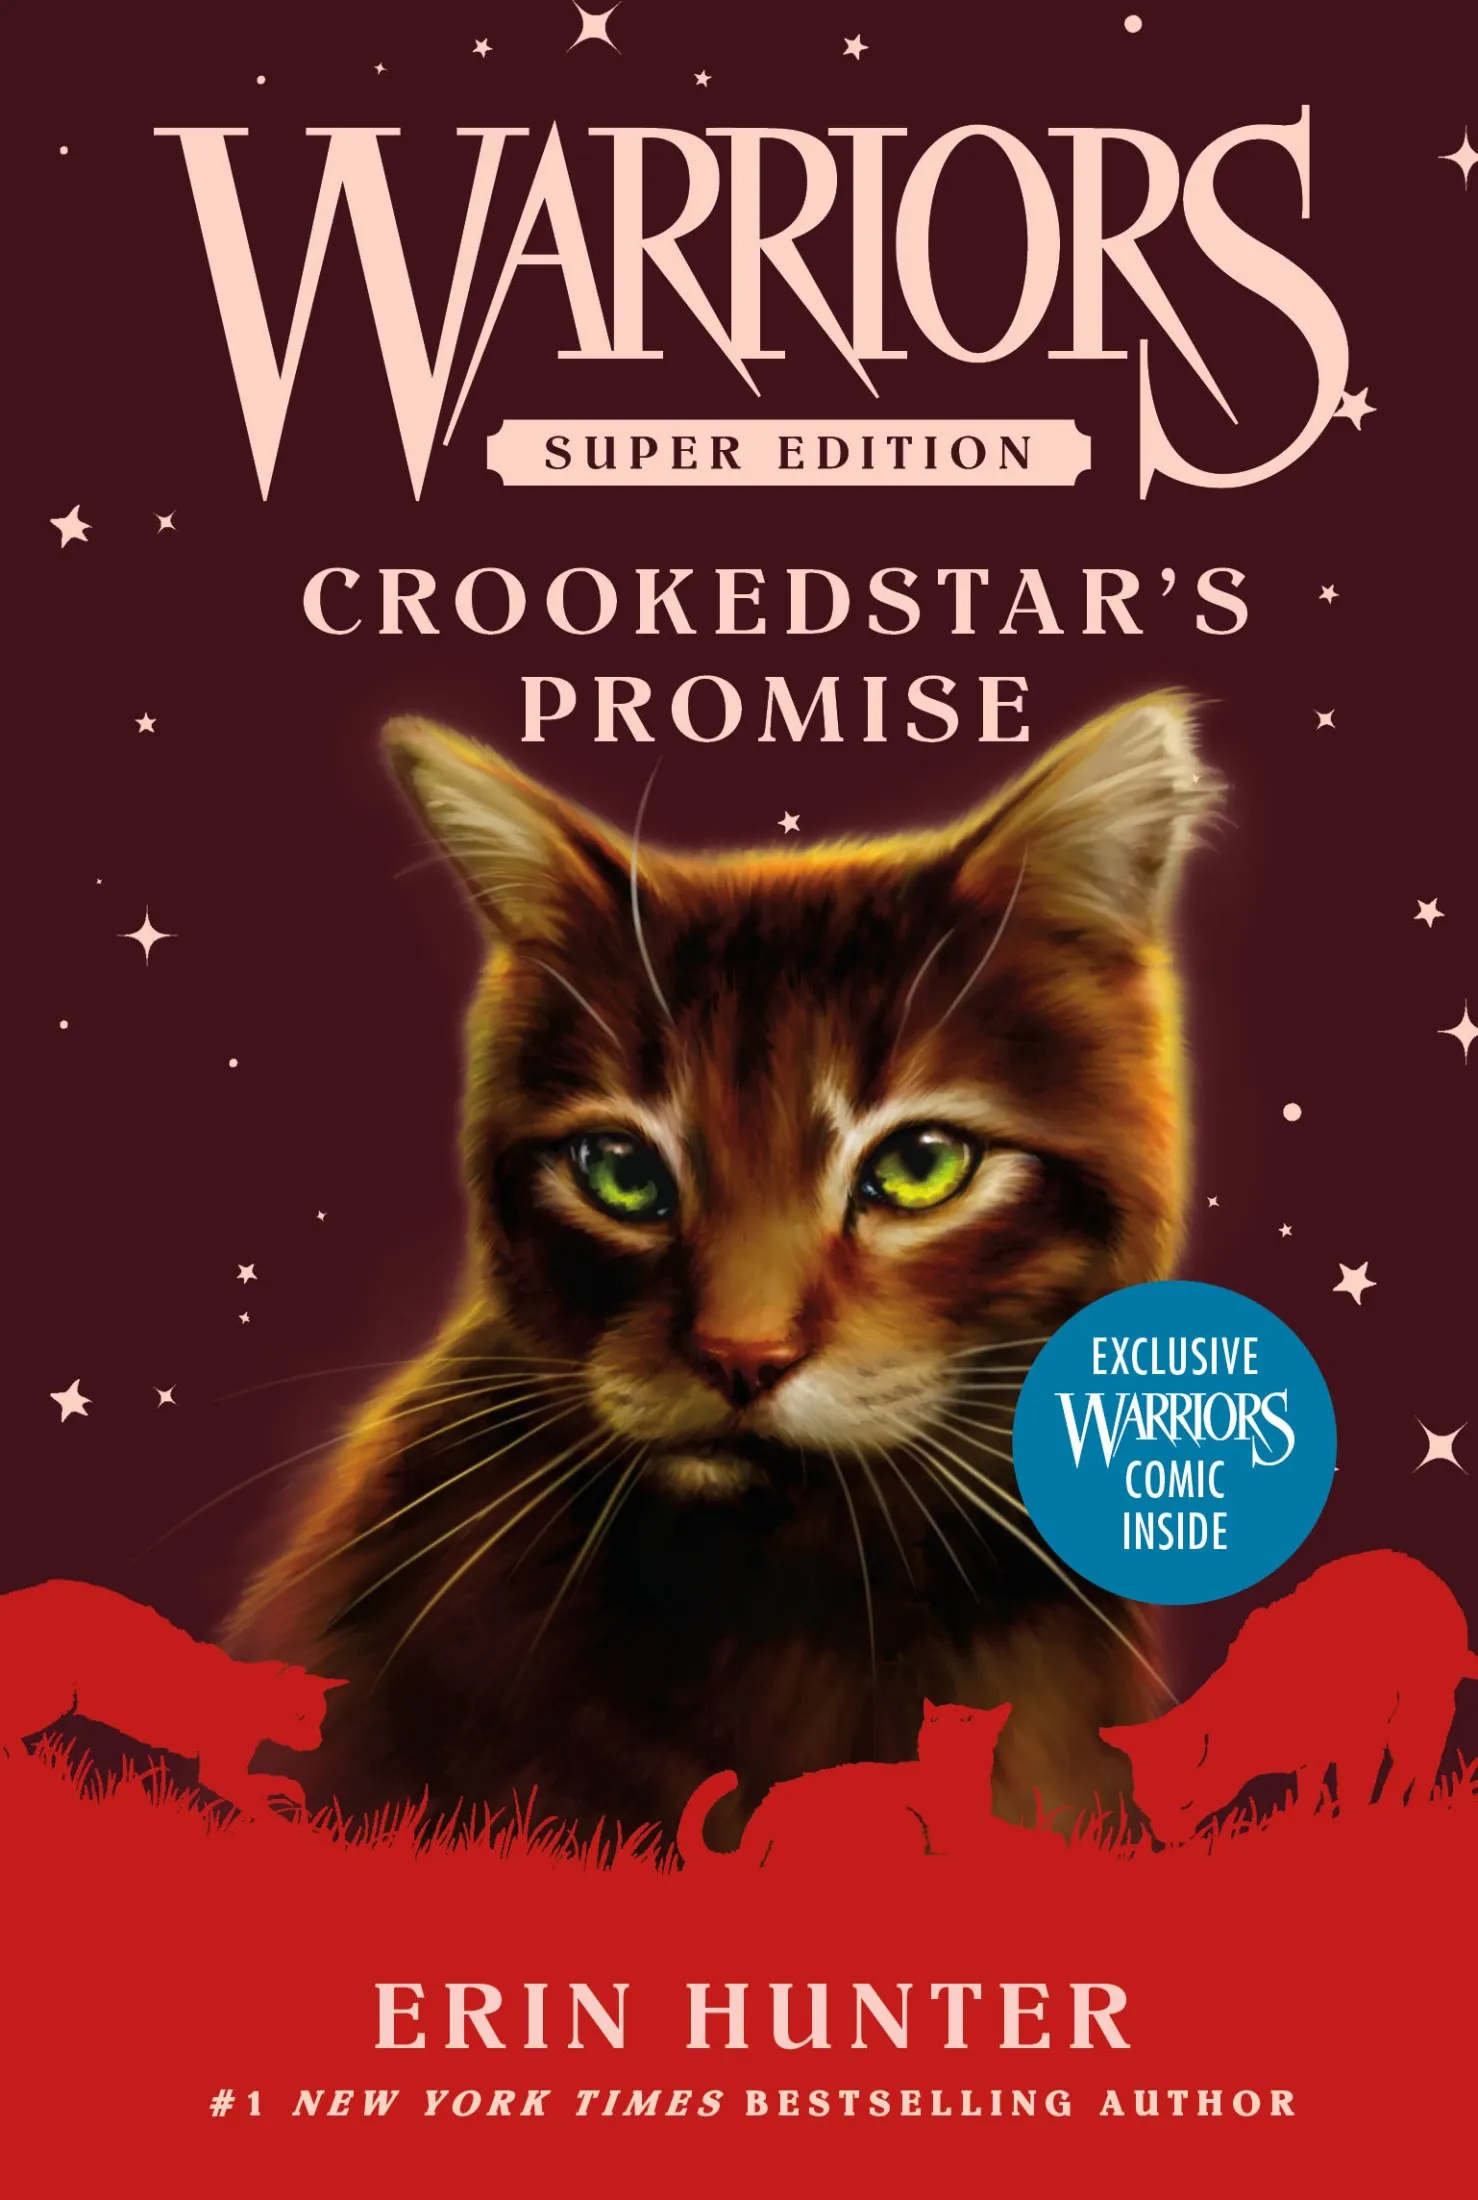 Crookedstar's Promise (Warriors: Super Edition #4)